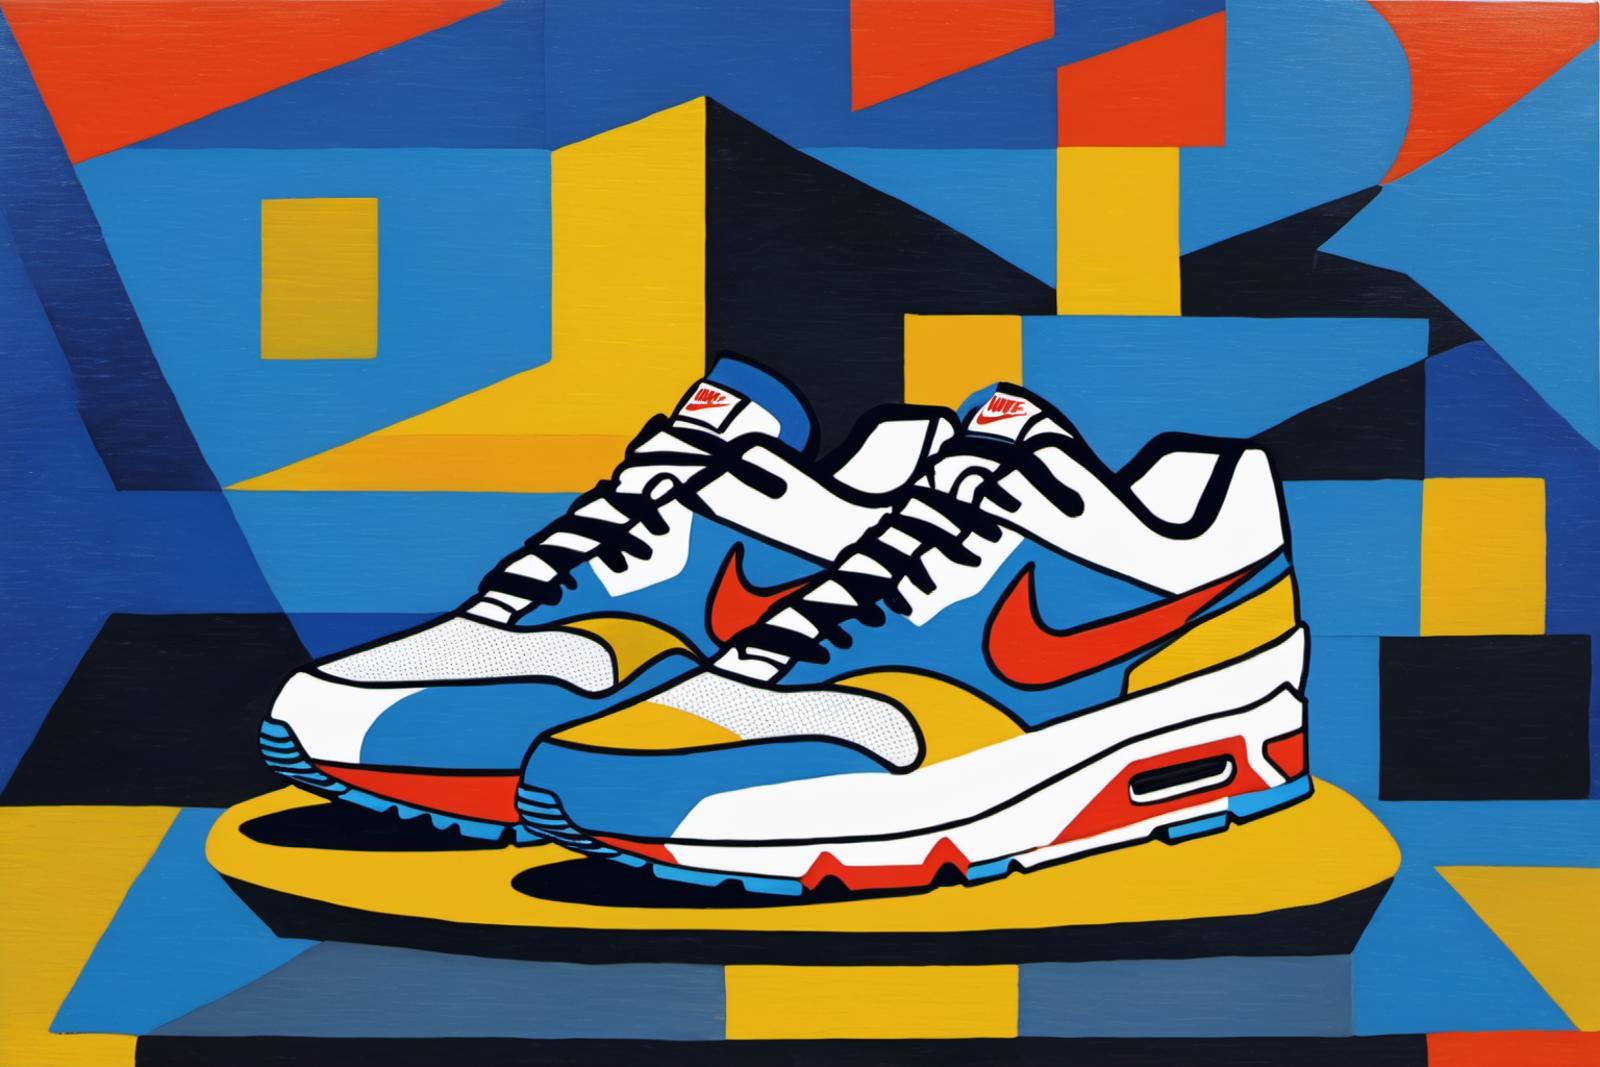 Blue, Yellow, and White Nike Shoe Artwork